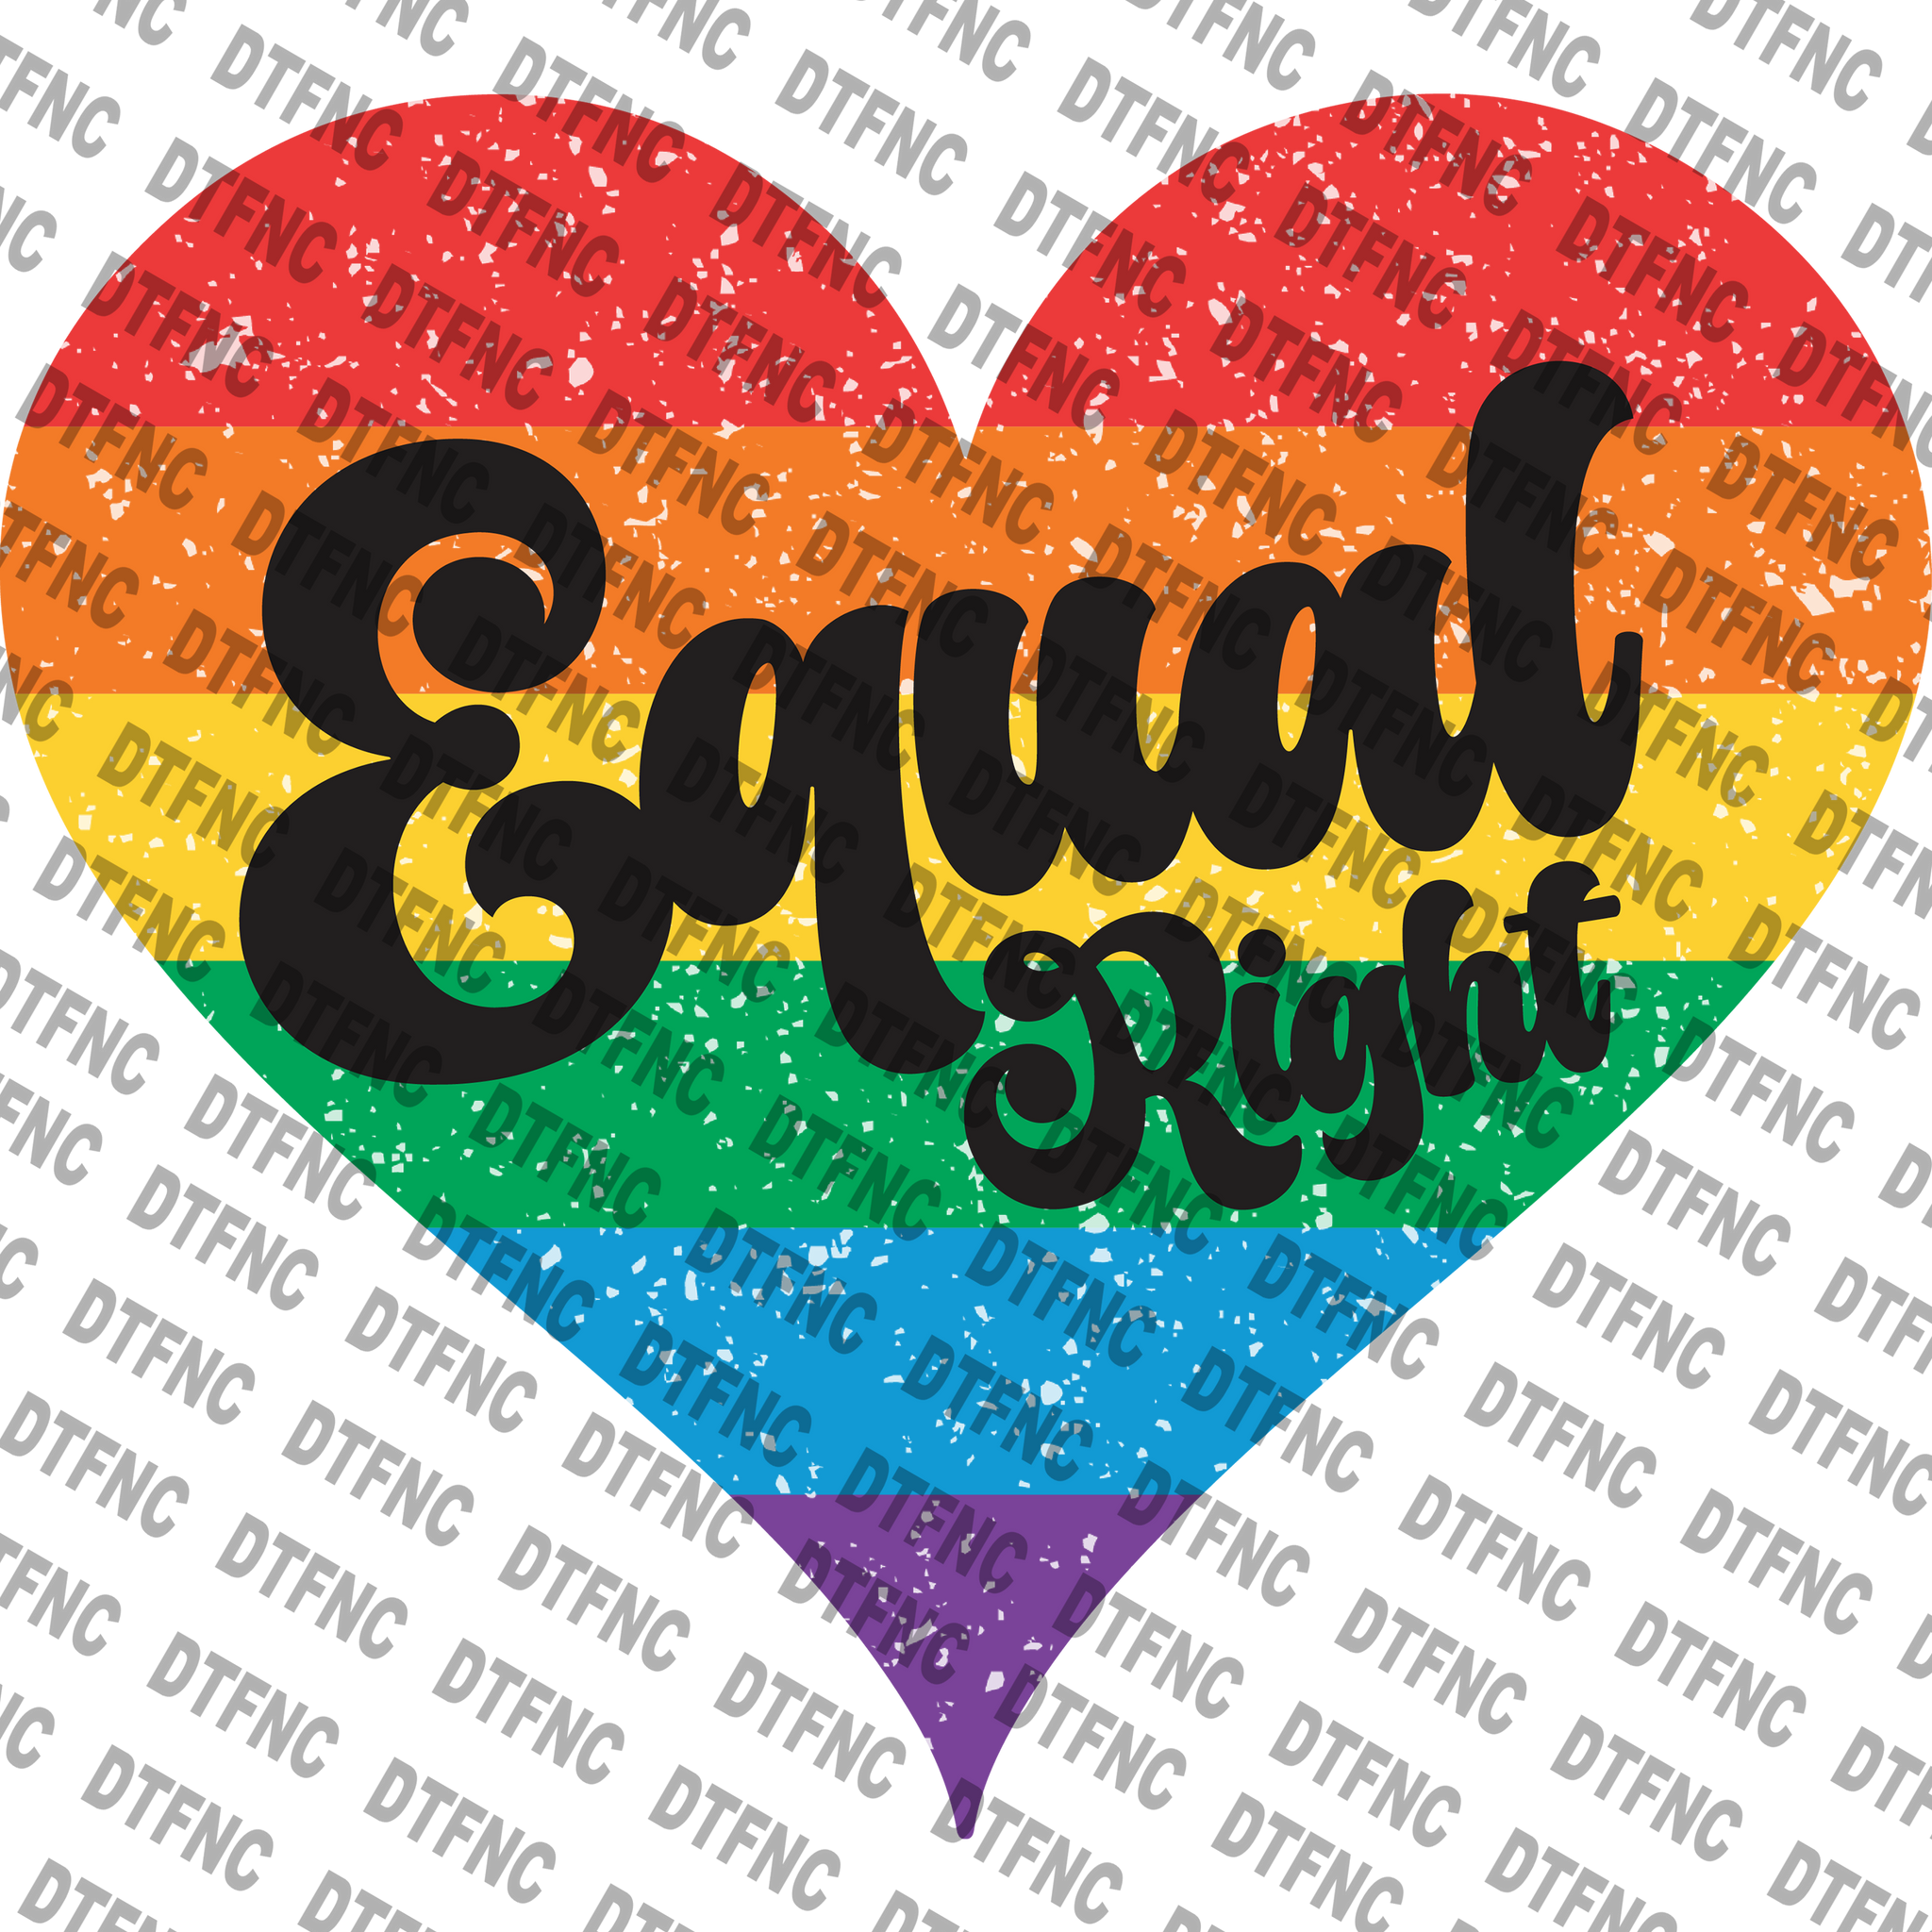 LGBTQ - Equal!